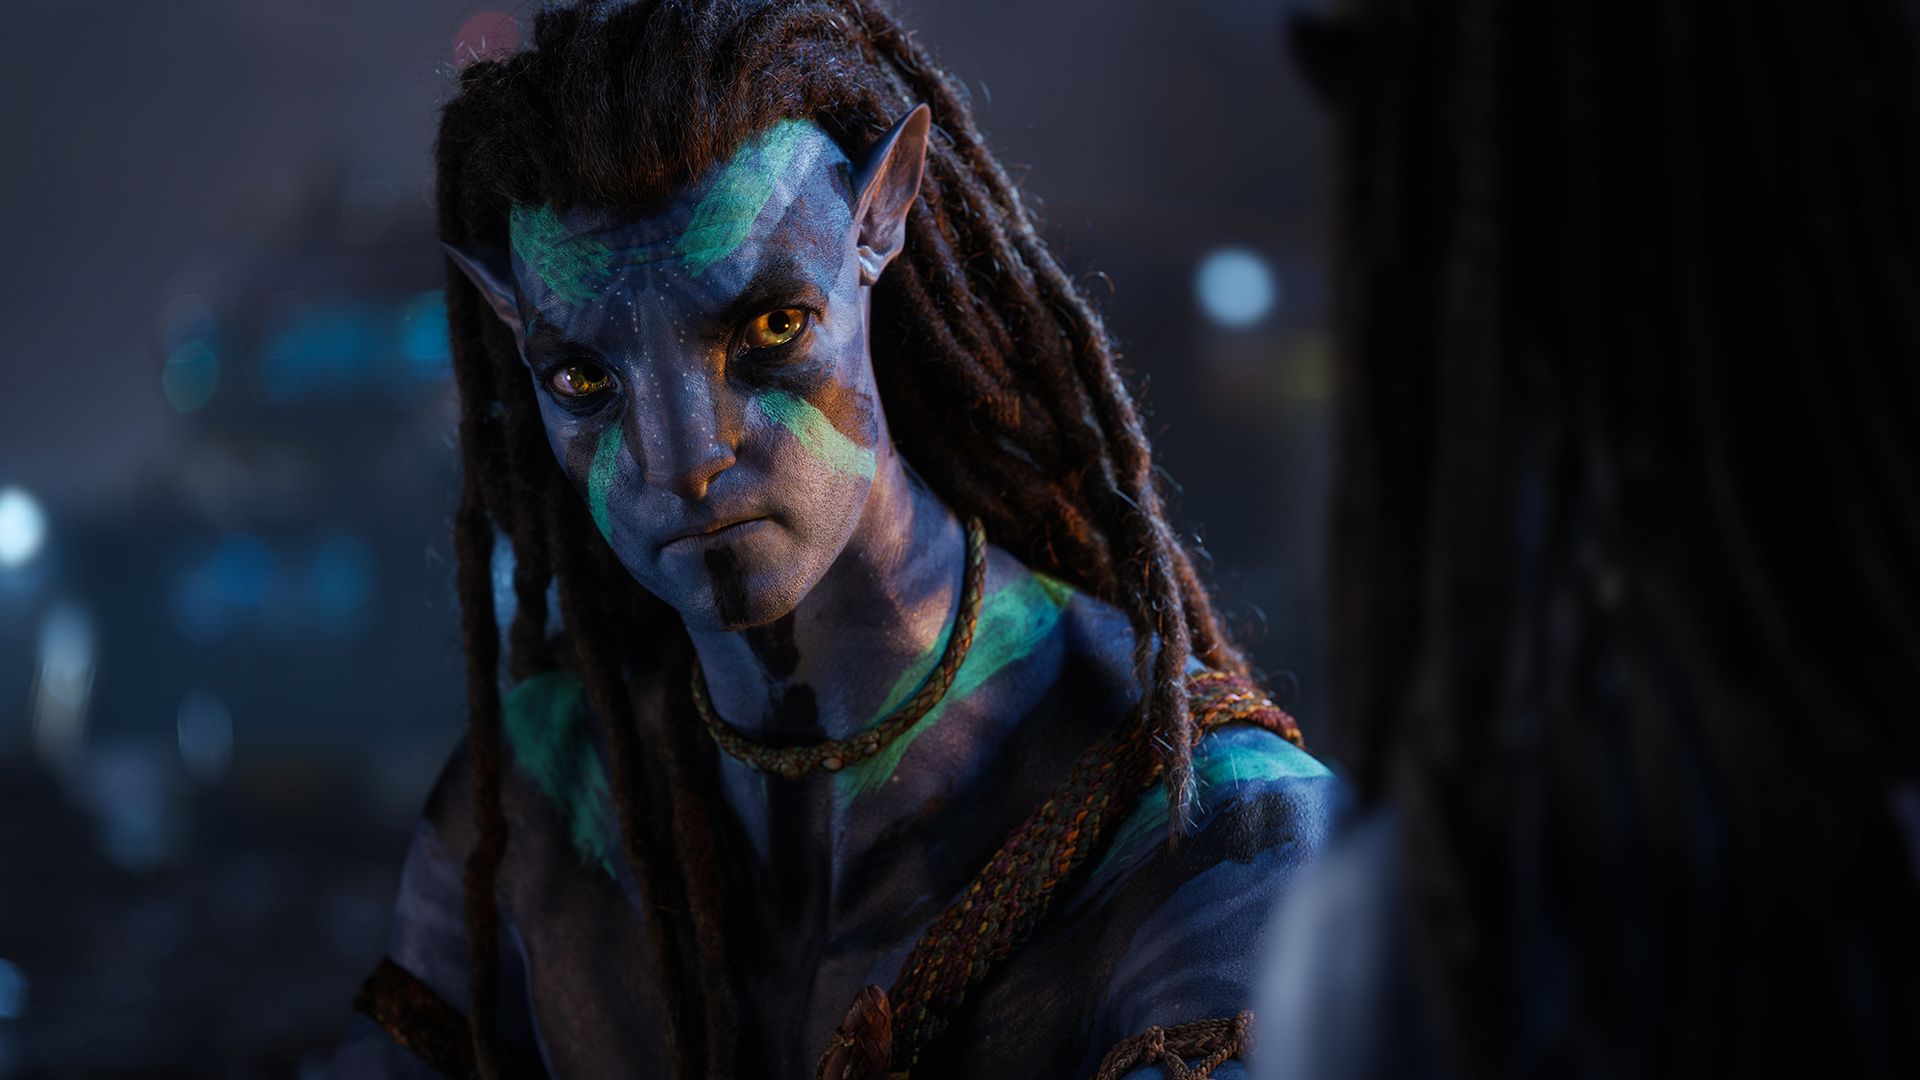 Sam Worthington in the movie “Avatar: The Way of Water”